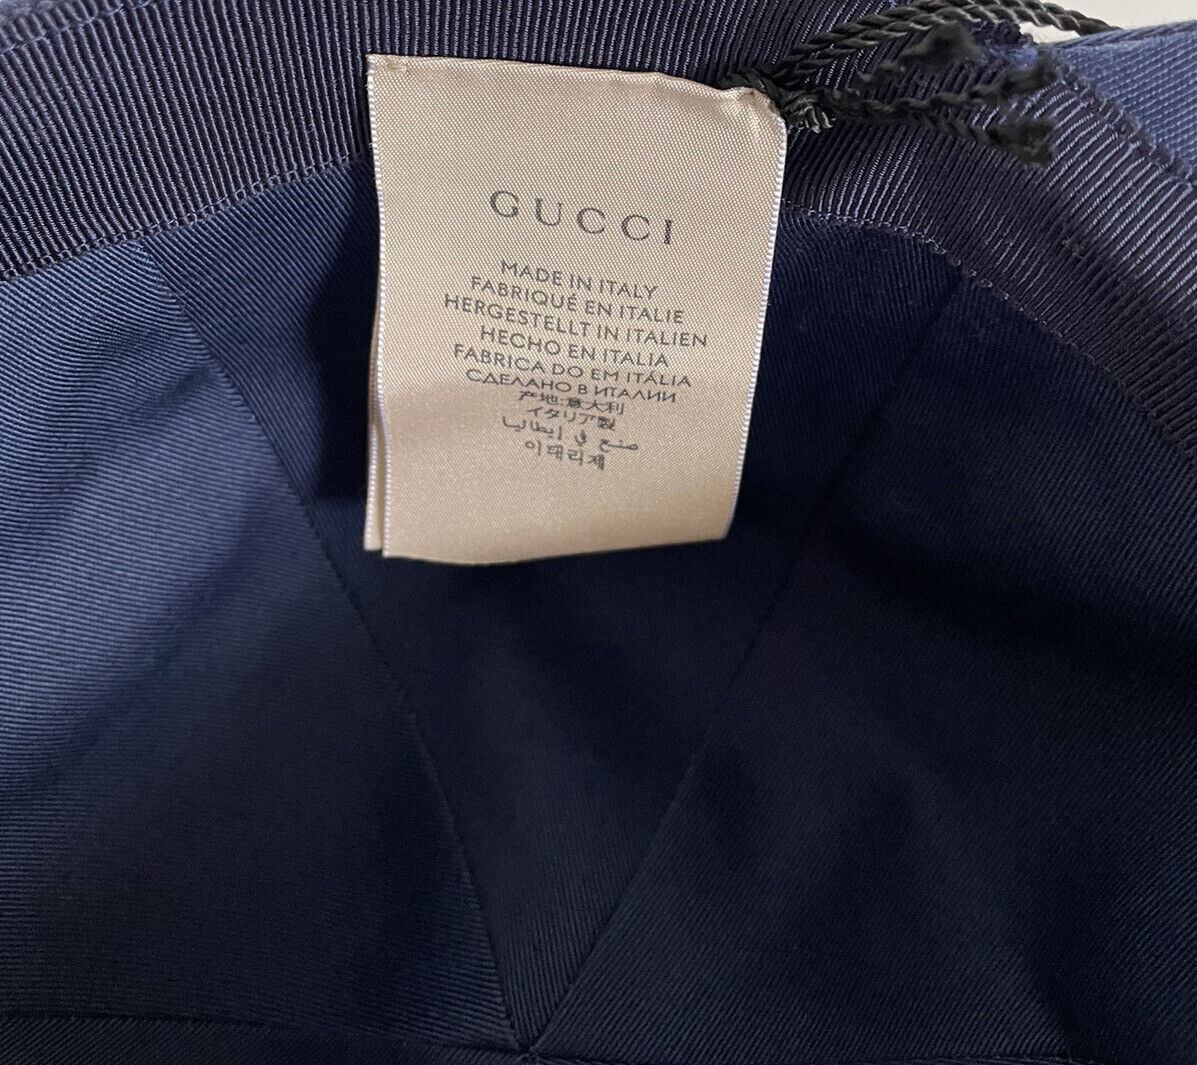 Neu mit Etikett: Gucci Eschatology Baseballkappe, blaue Mütze, groß, hergestellt in Italien, 656183 